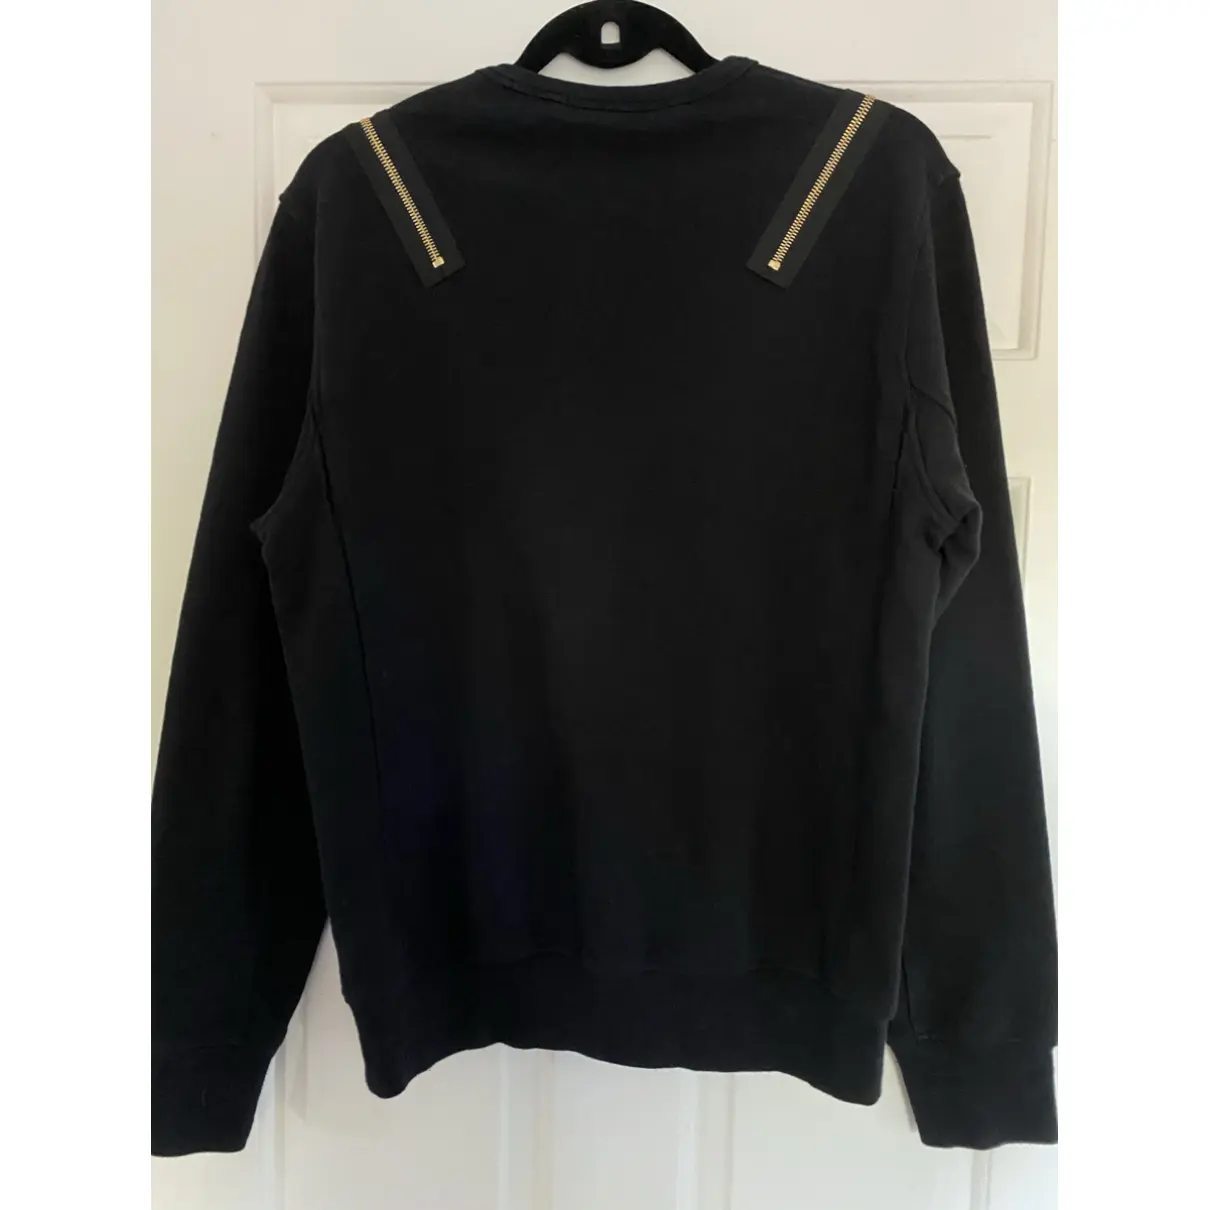 Buy Alexander McQueen Black Cotton Knitwear & Sweatshirt online